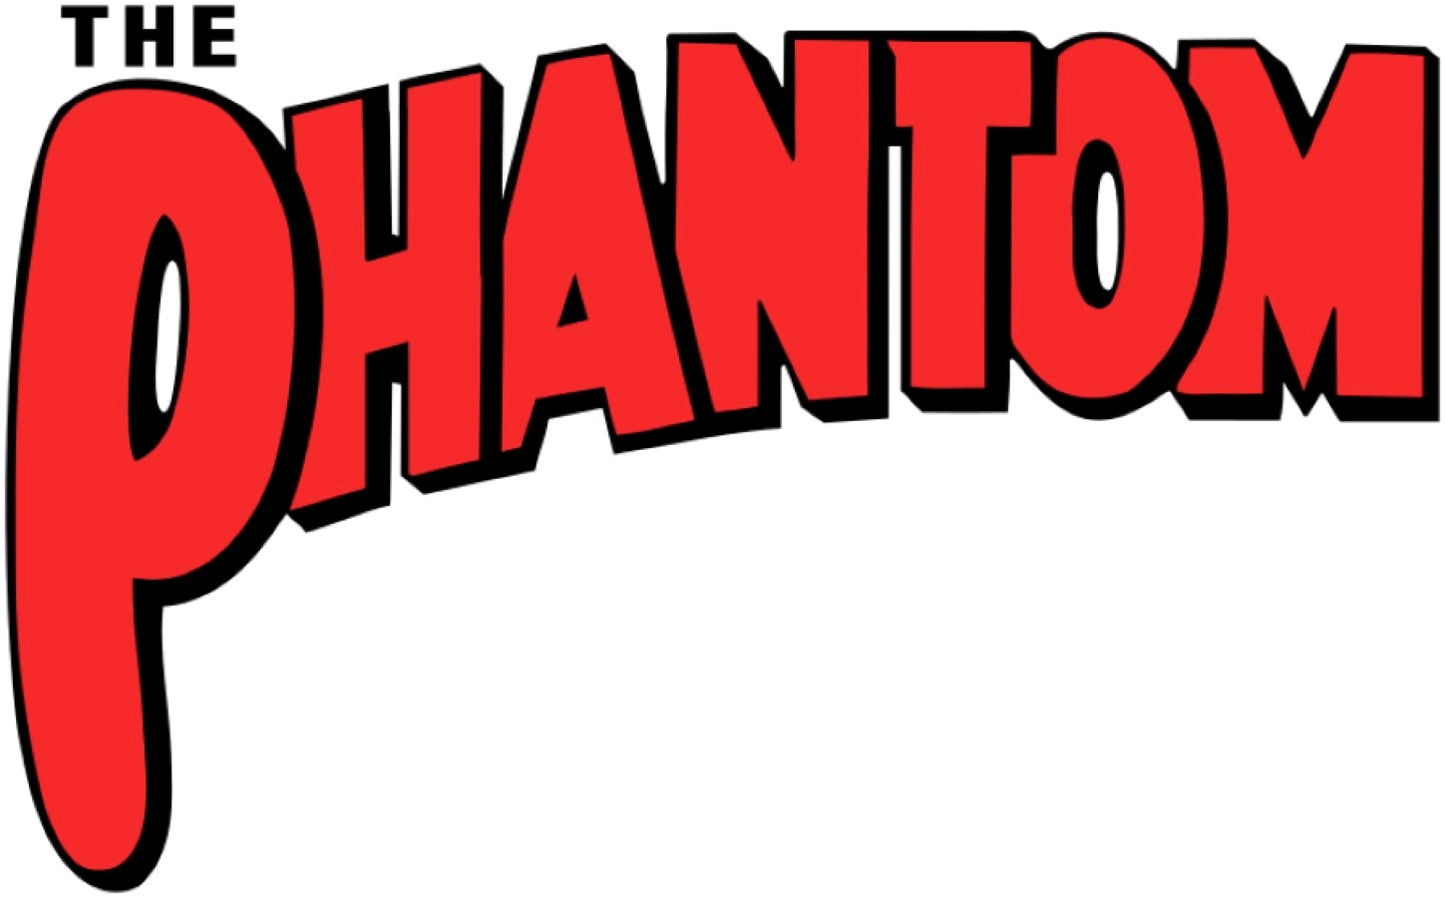 The Phantom - Phantom Singh Pirate H.A.C.K.S. Action Figure